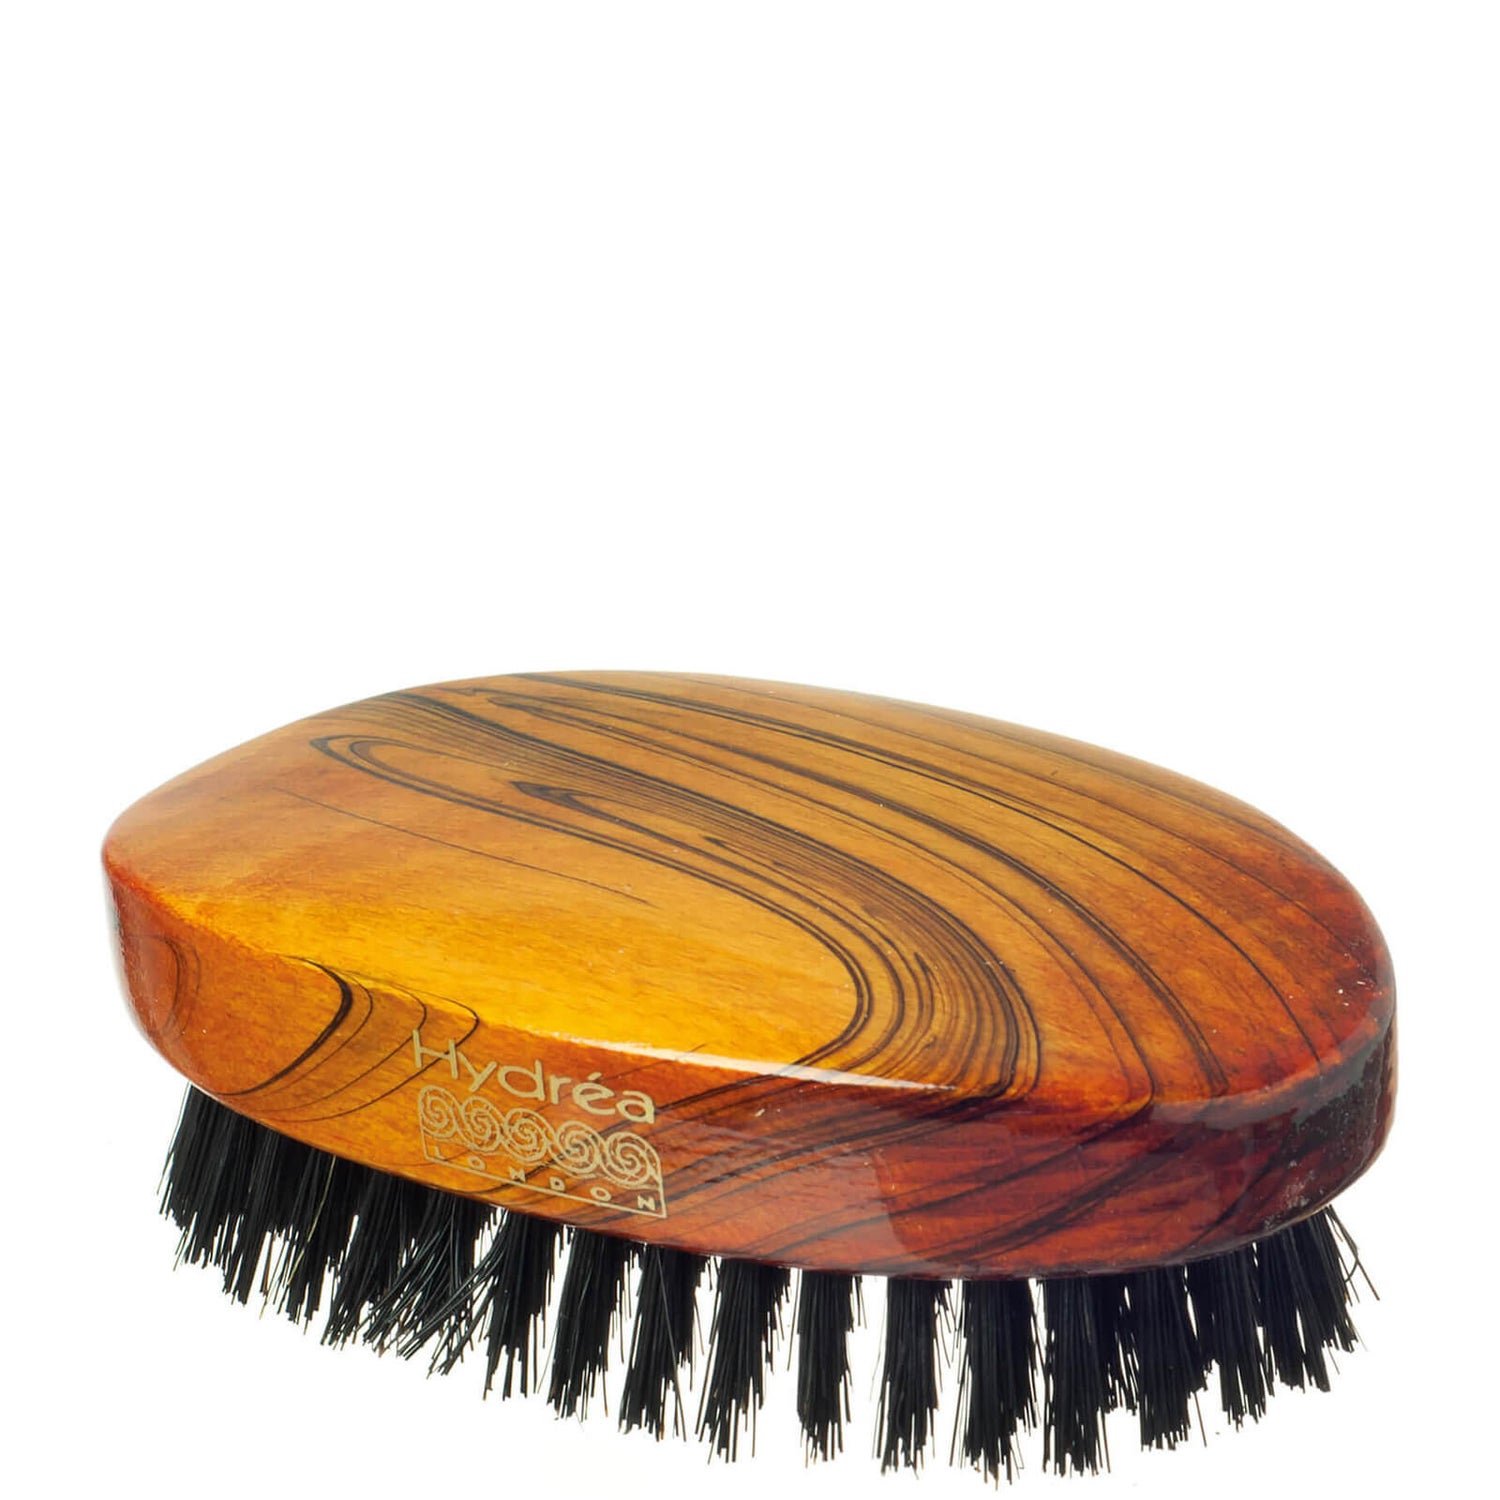 Hydrea London Military Hairbrush Gloss Finish with Pure Black Boar Bristle (Hard Strength) FSC Certified